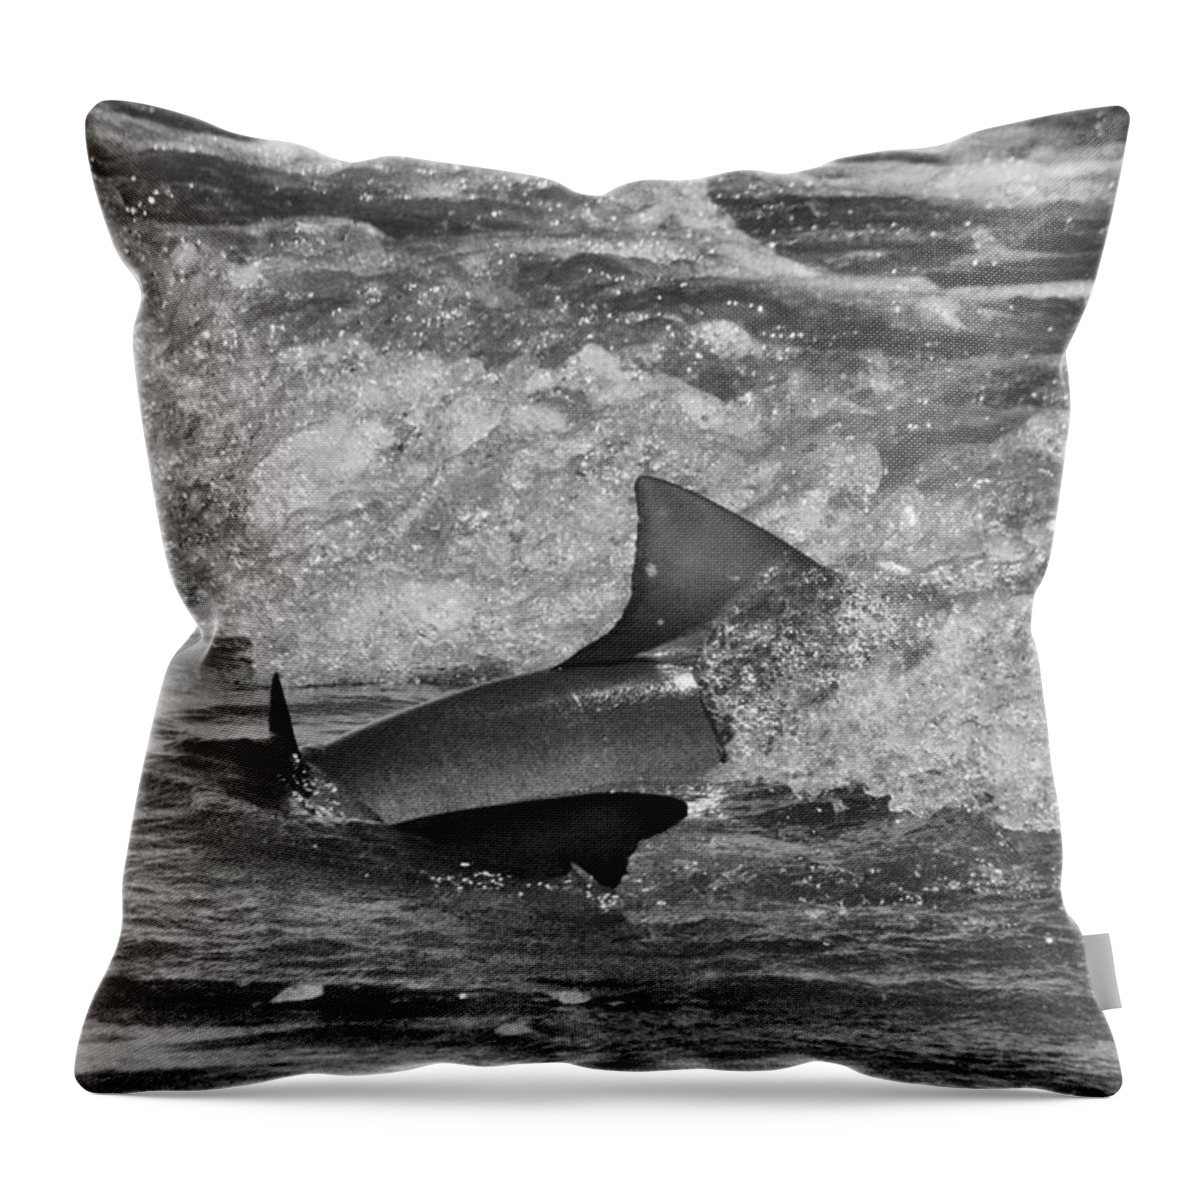 Shark Throw Pillow featuring the photograph Shark by Randy J Heath